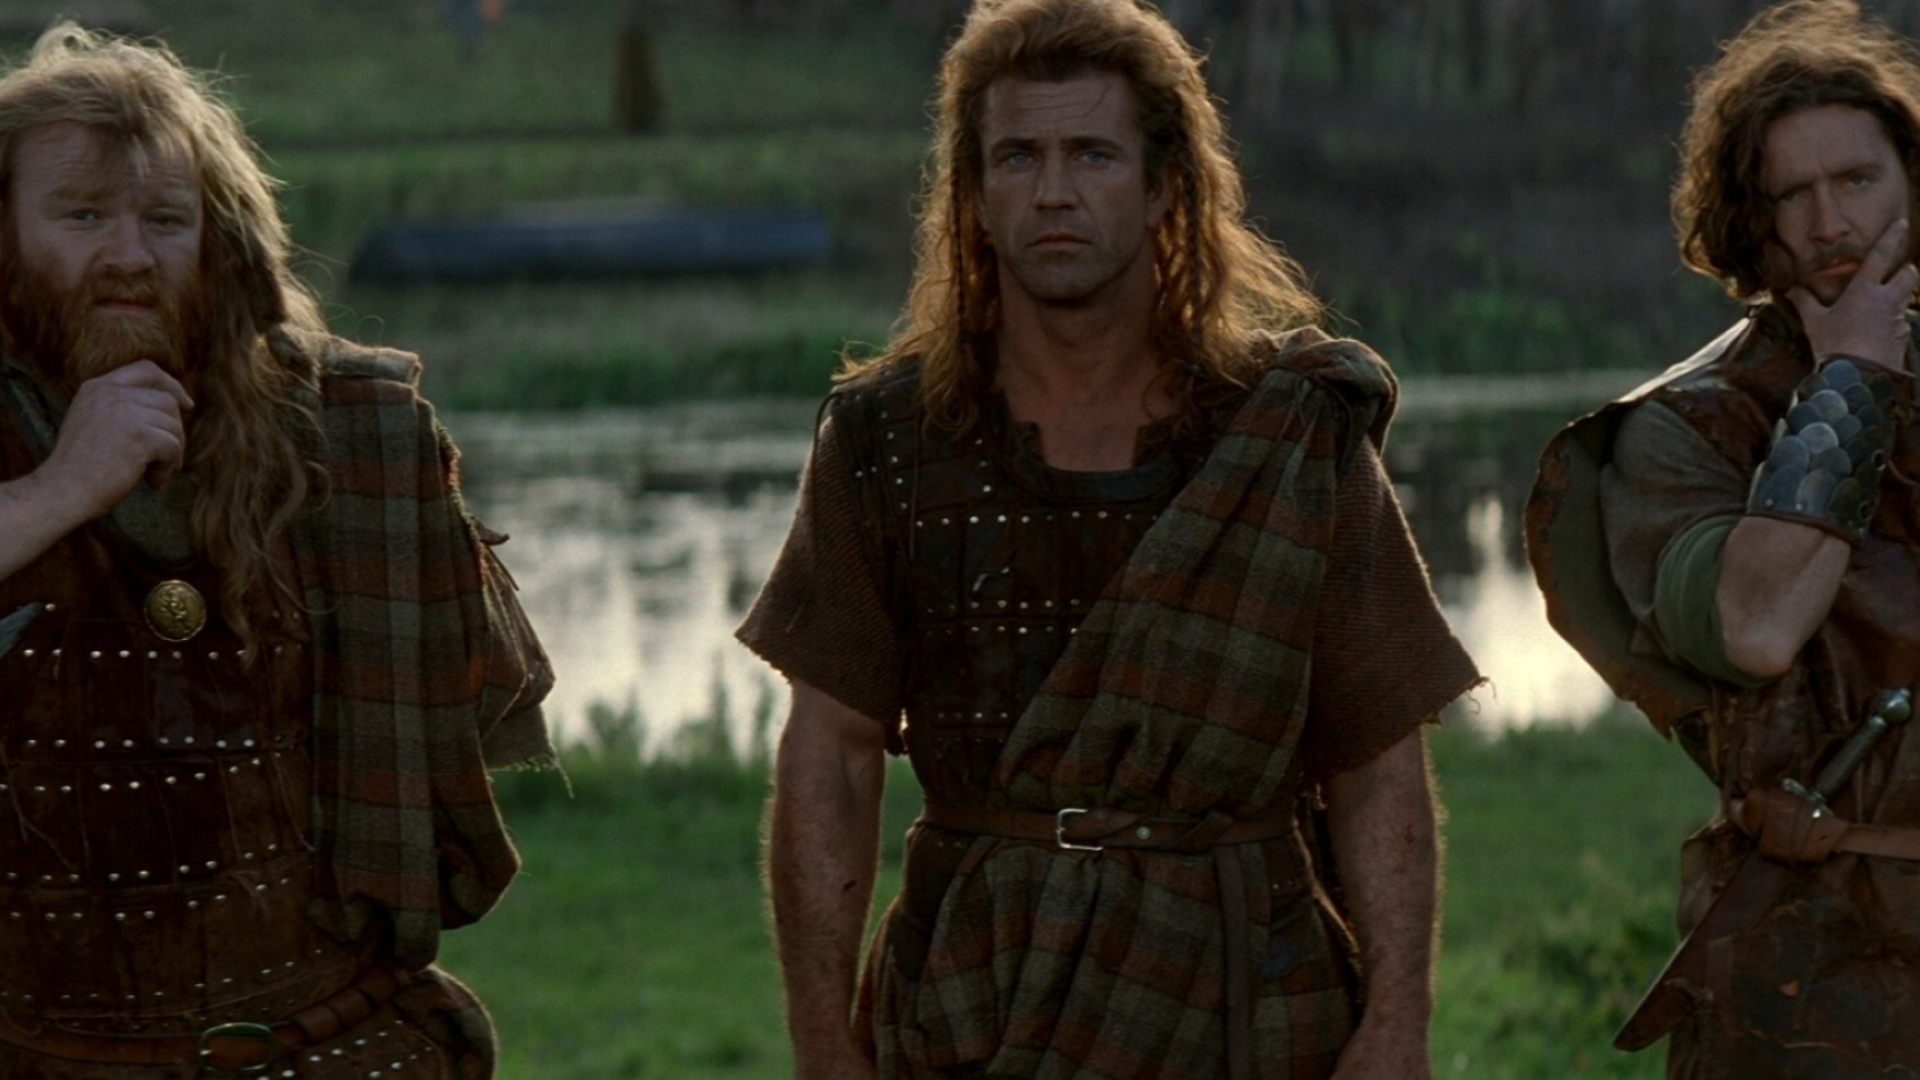 Braveheart: Mel Gibson as William Wallace, Brendan Gleeson as Hamish, David O'Hara as Stephen of Ireland. 1920x1080 Full HD Wallpaper.